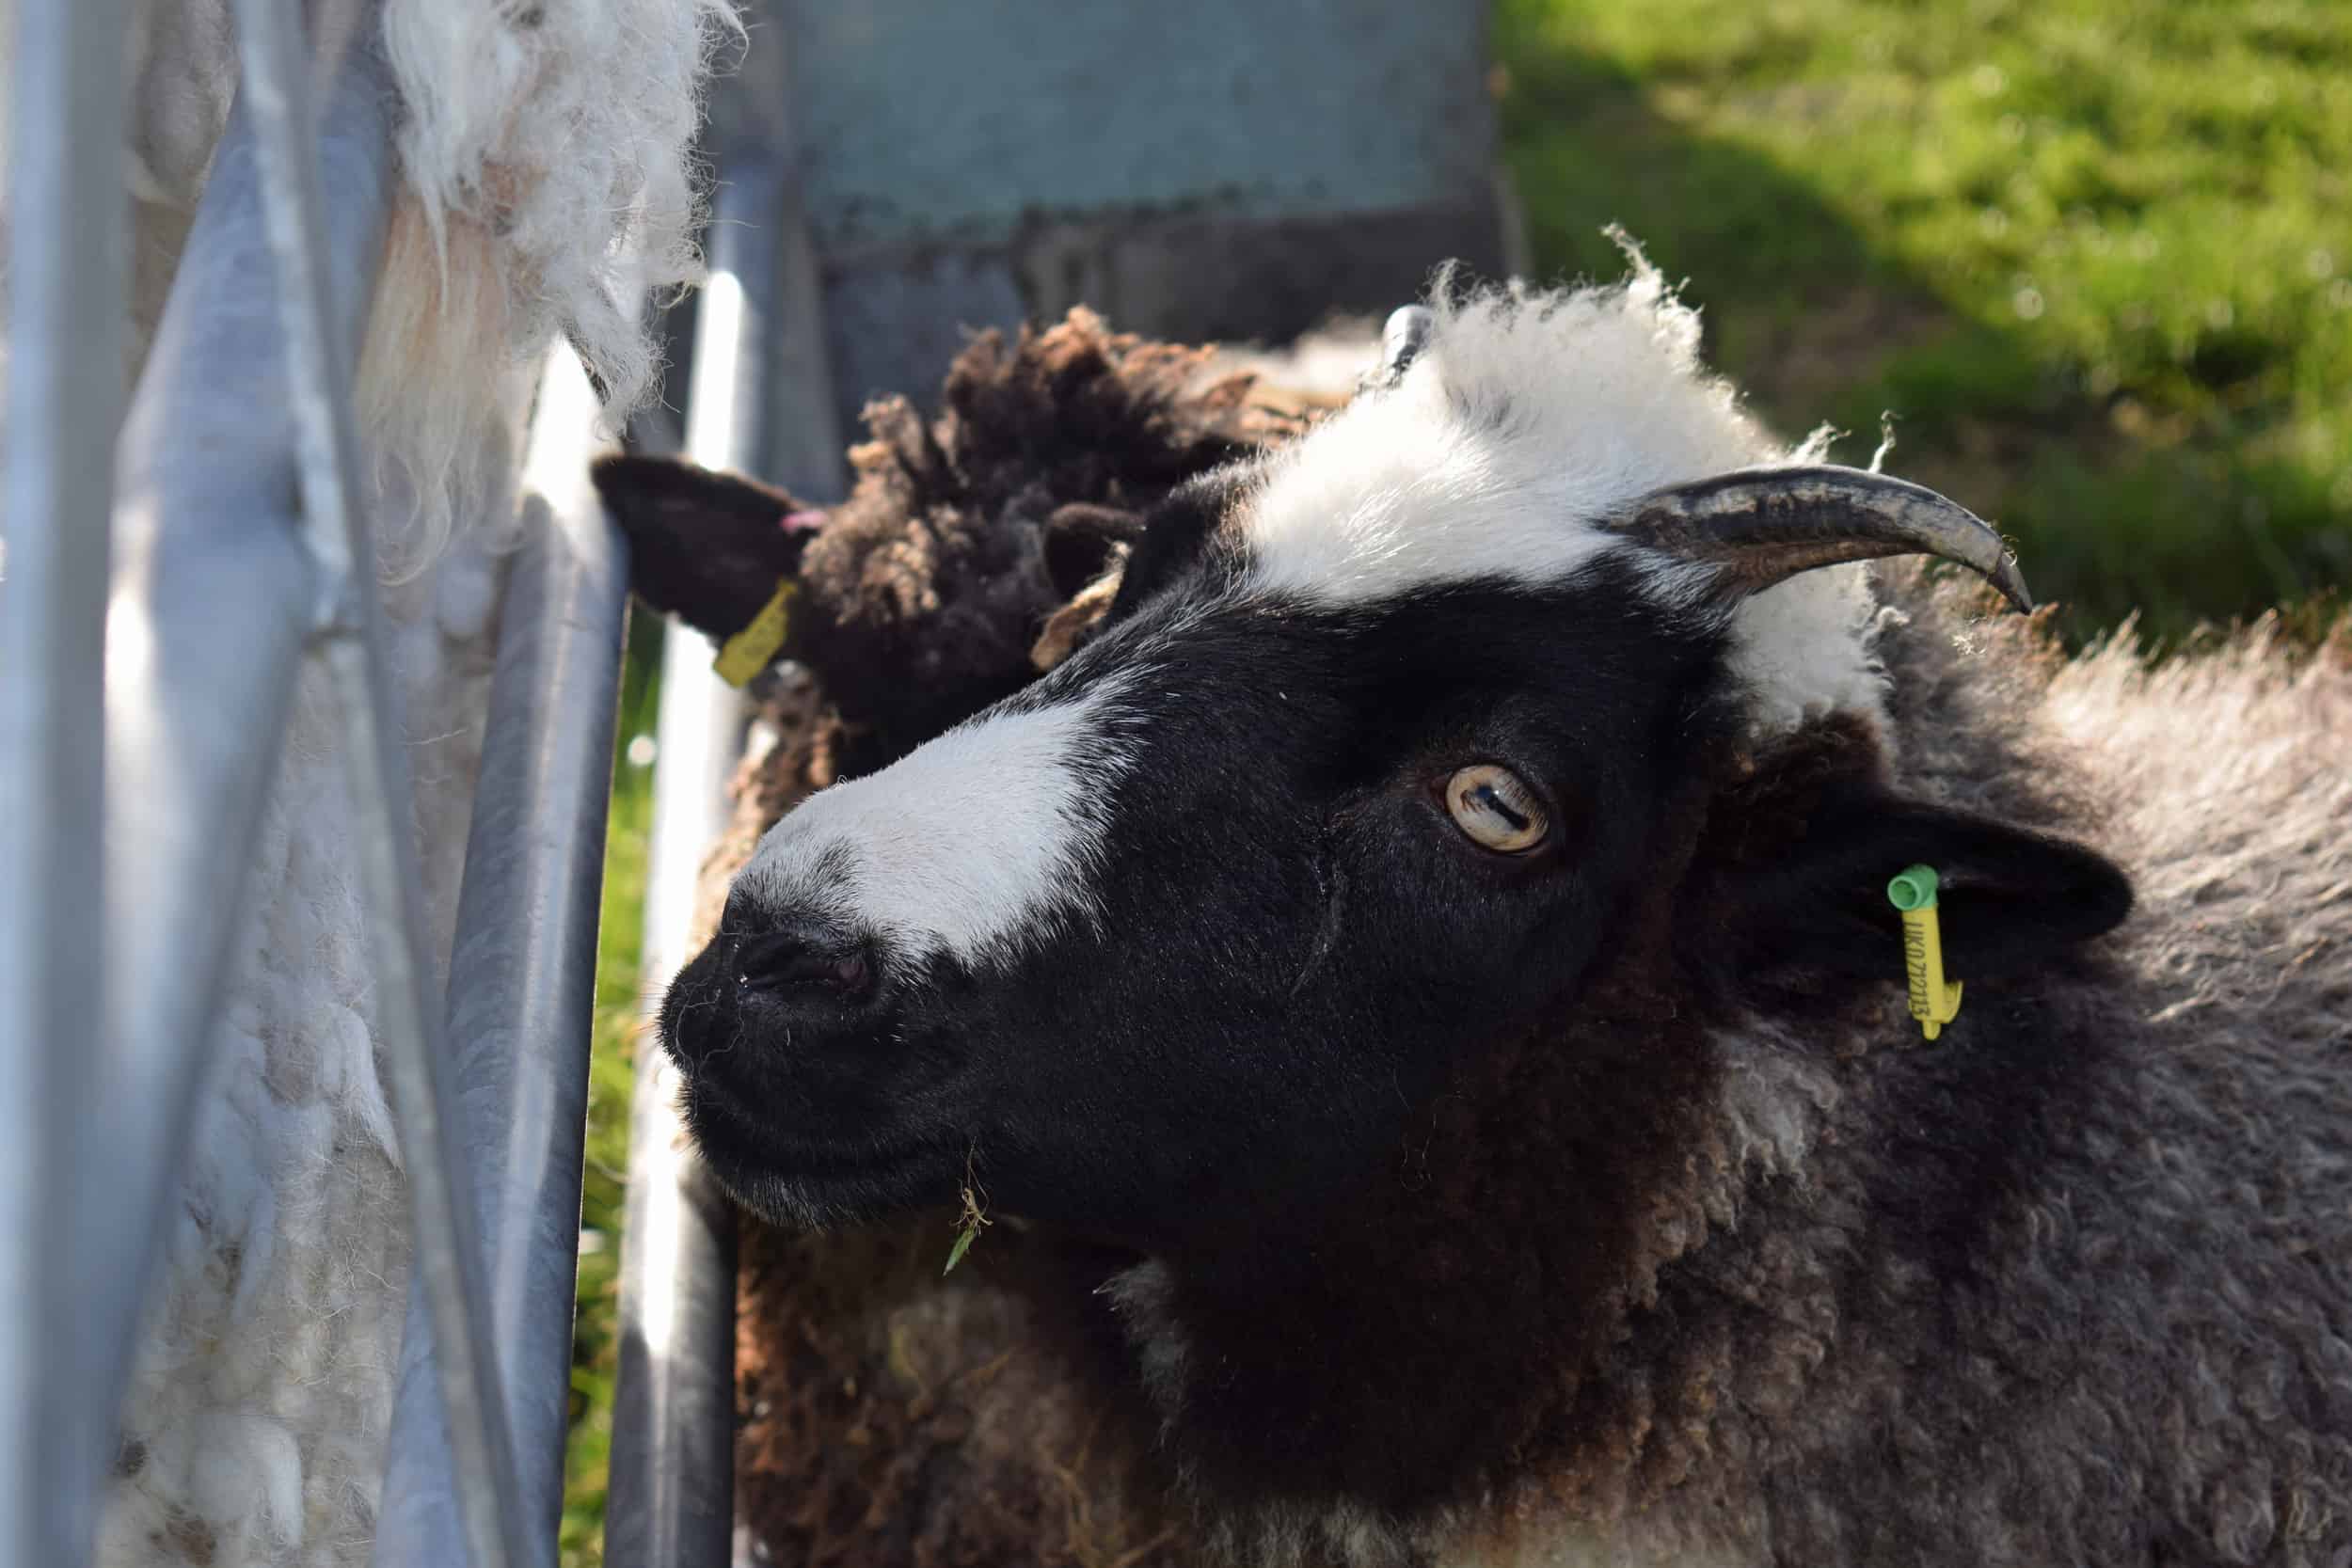 Holly pet lamb sheep jacob cross shetland spotted black grey white wales gwynedd british wool gifts homeware